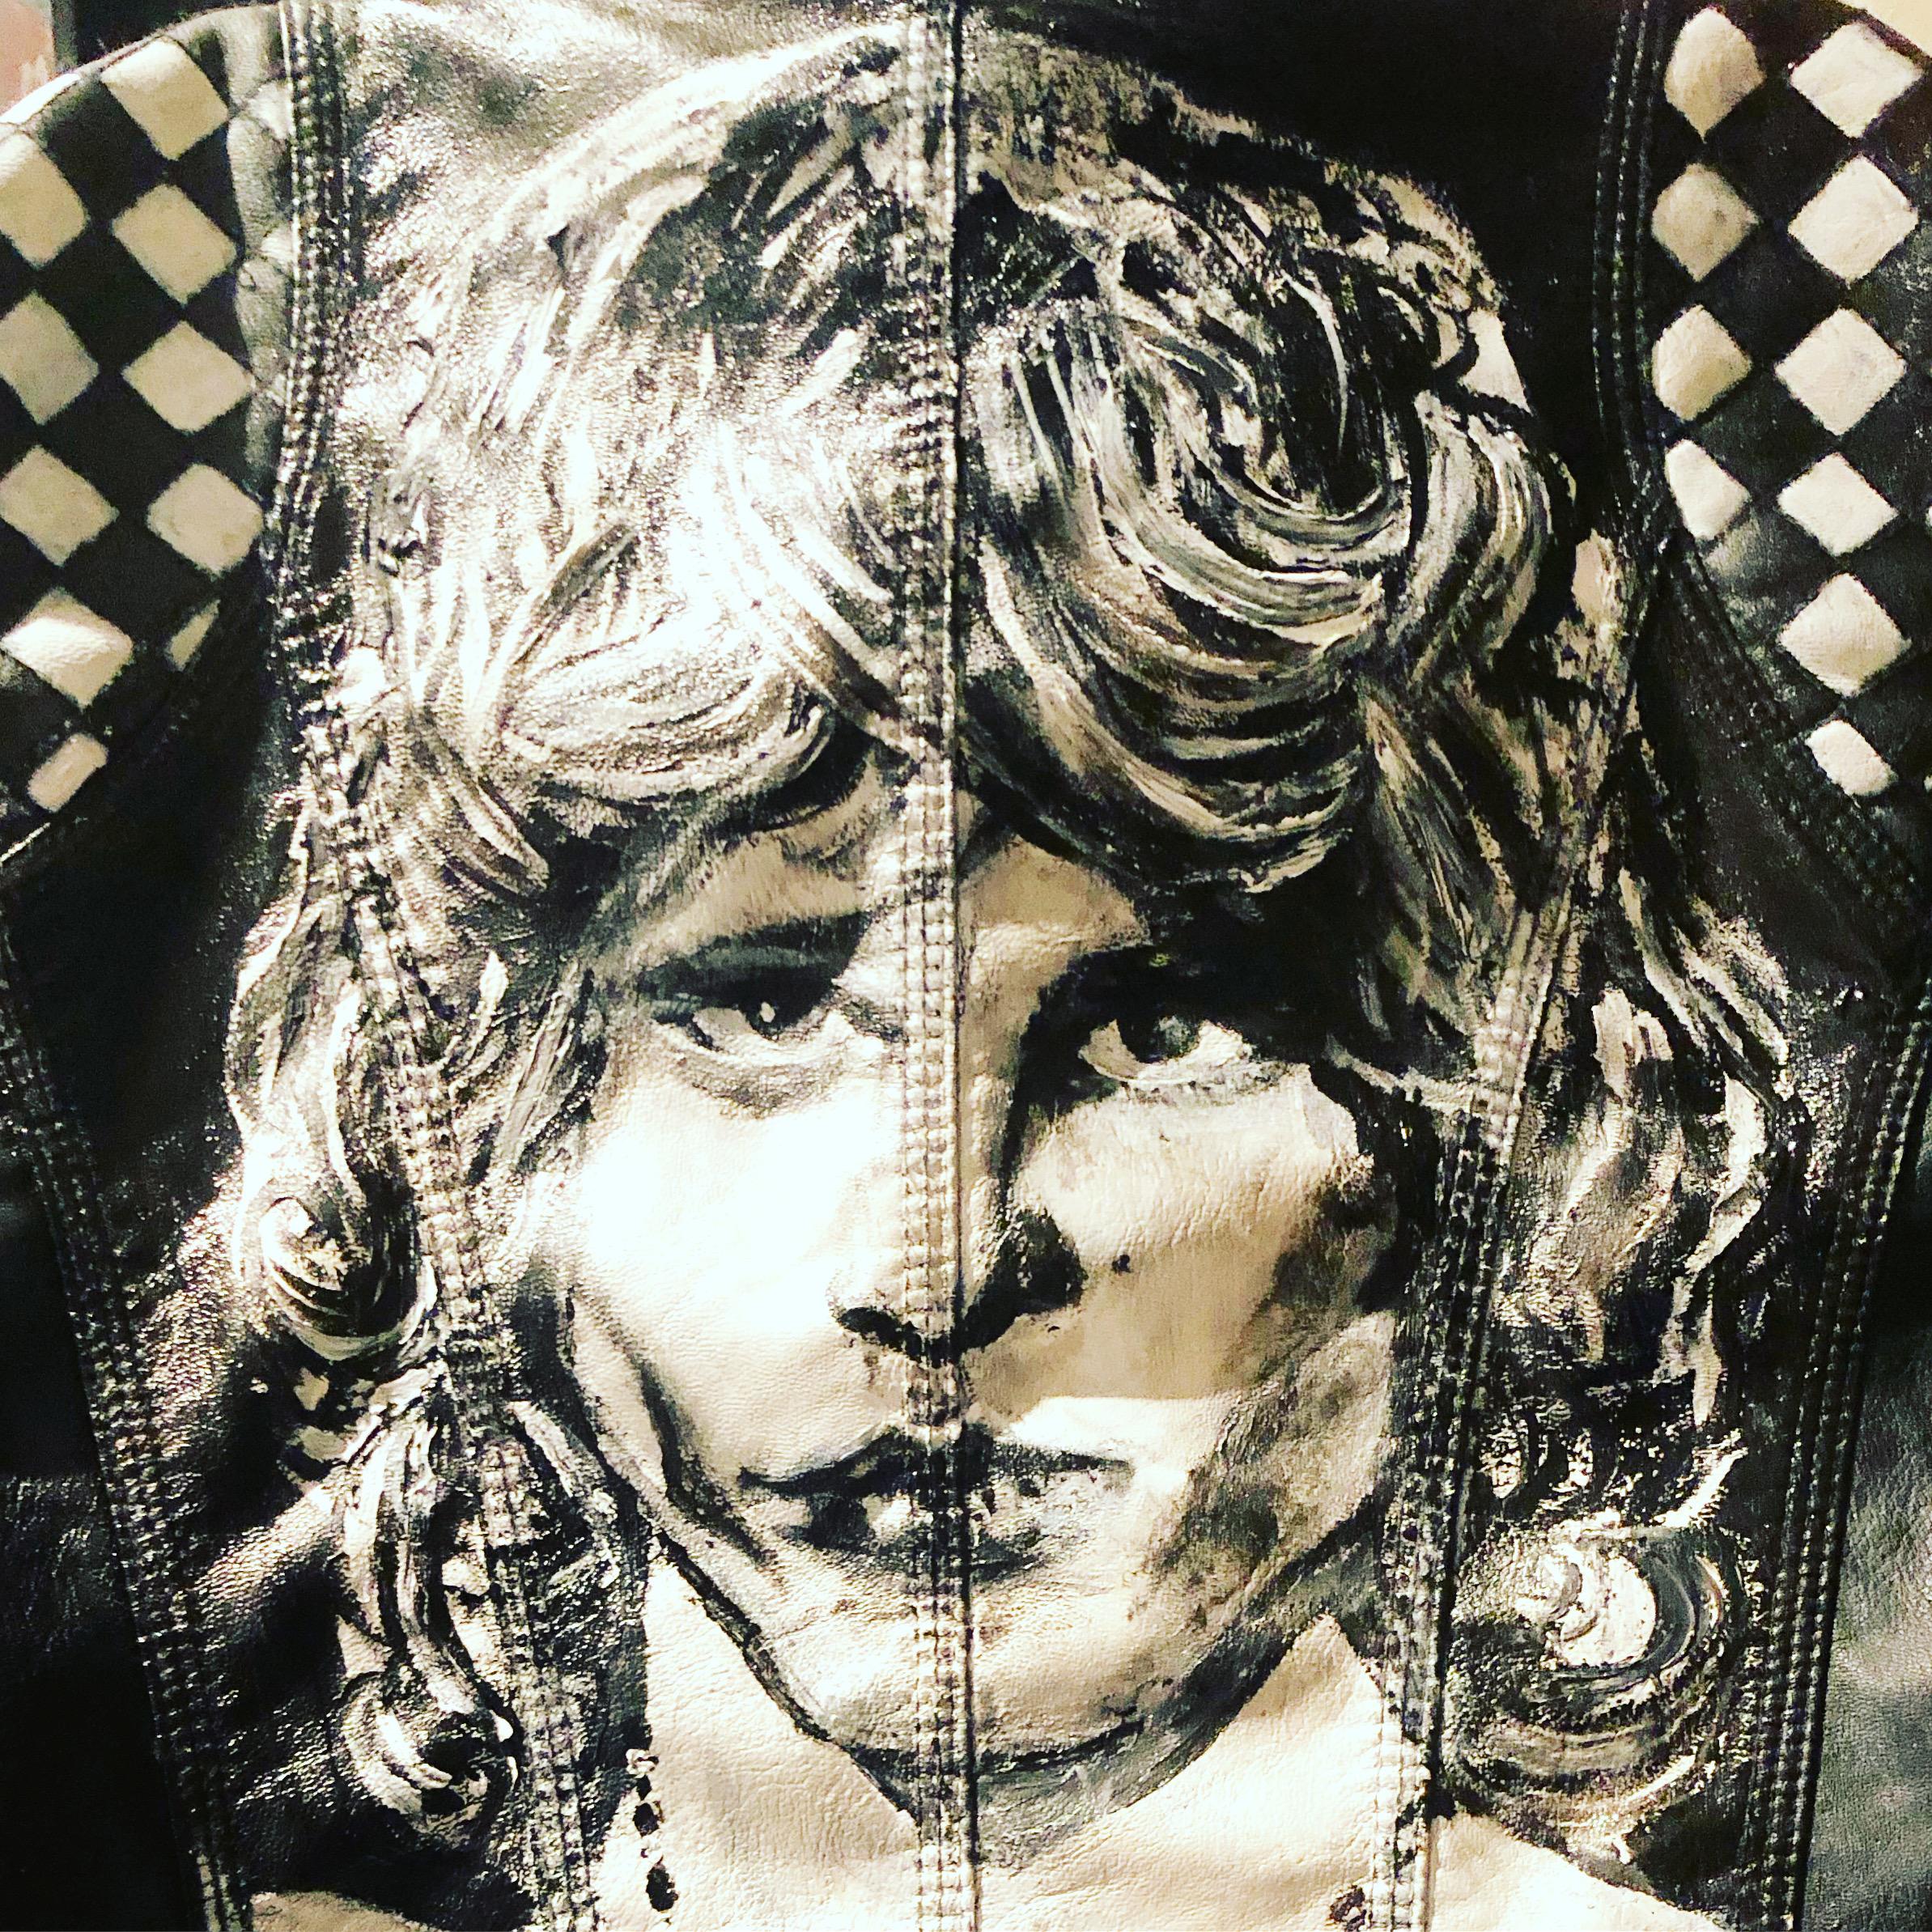 Jaket Jim Morrison dipinto a mano su pelle